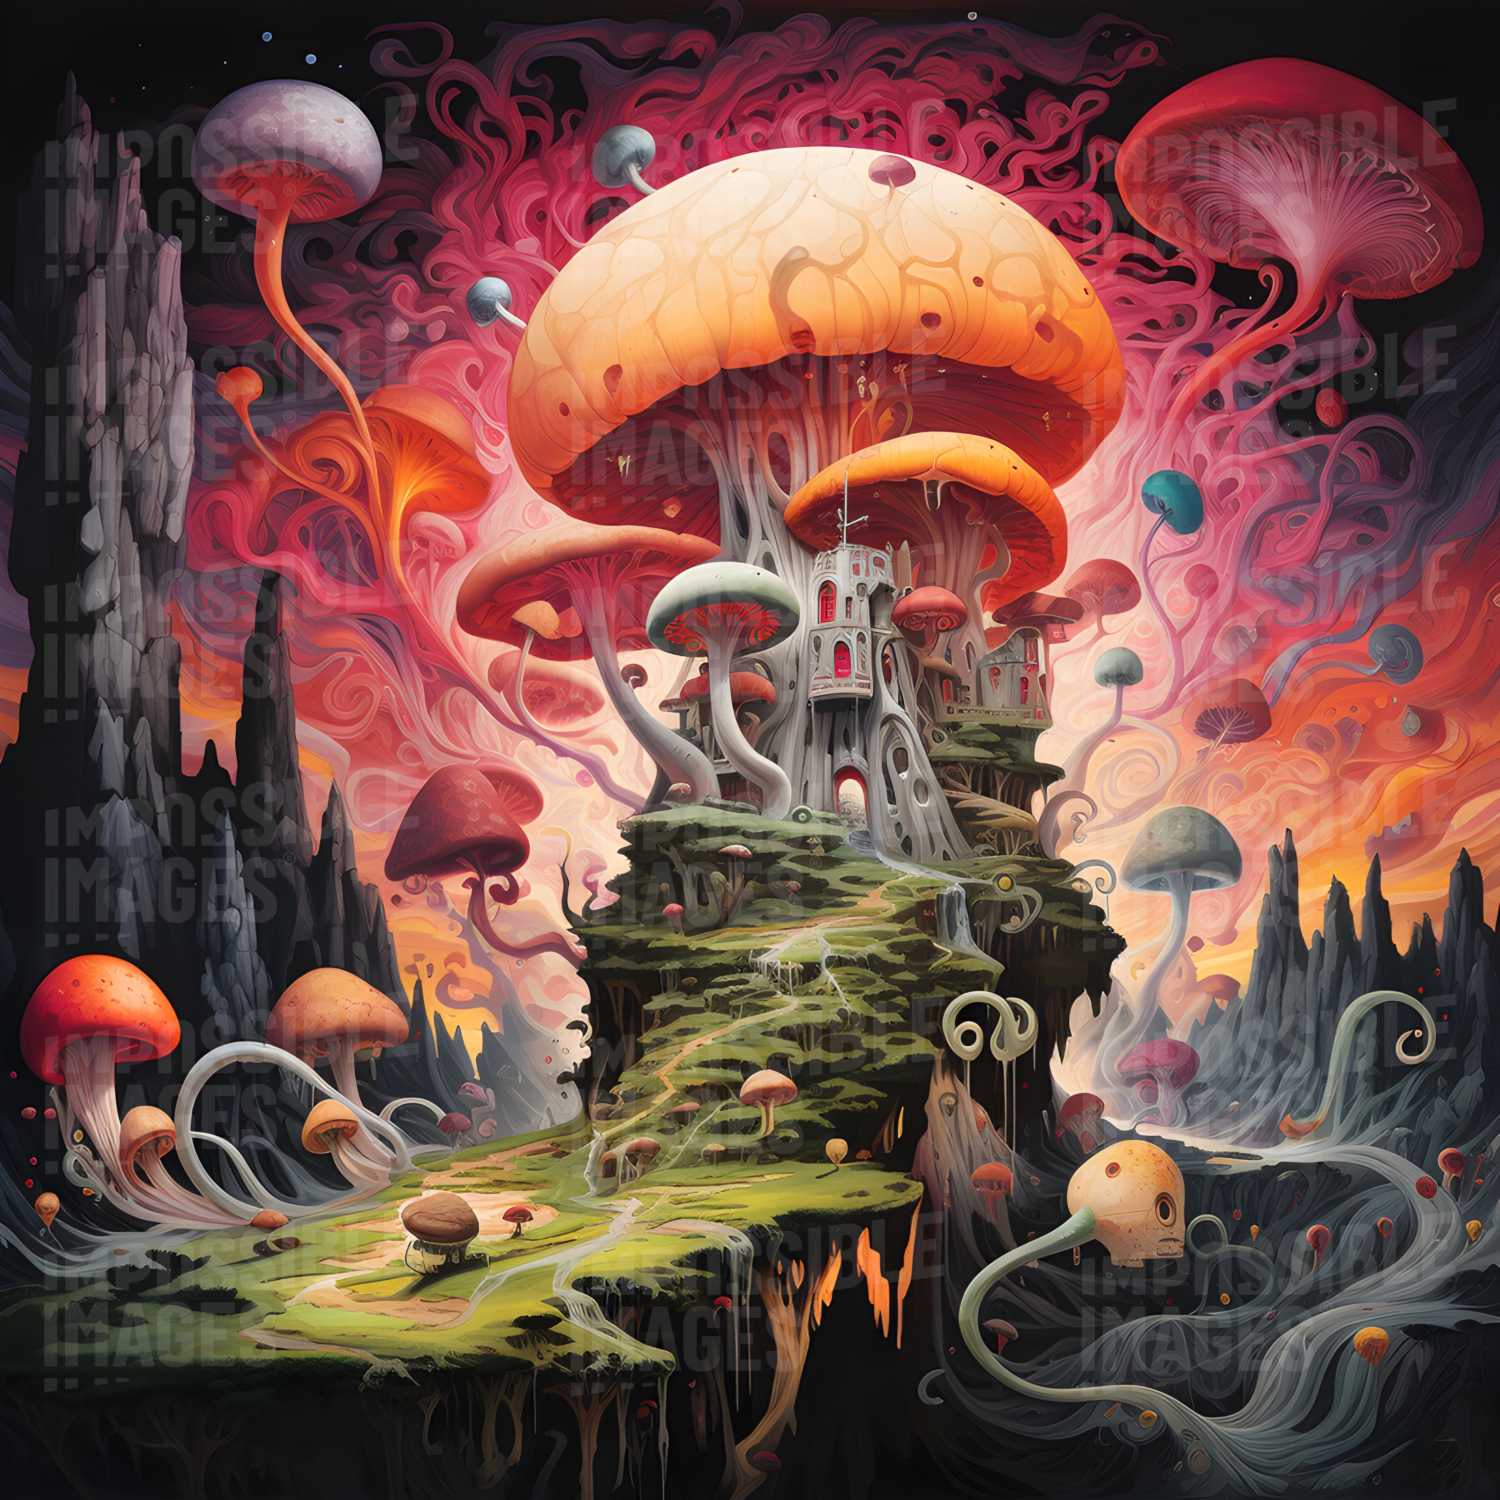 Trippy mushroom palace - 